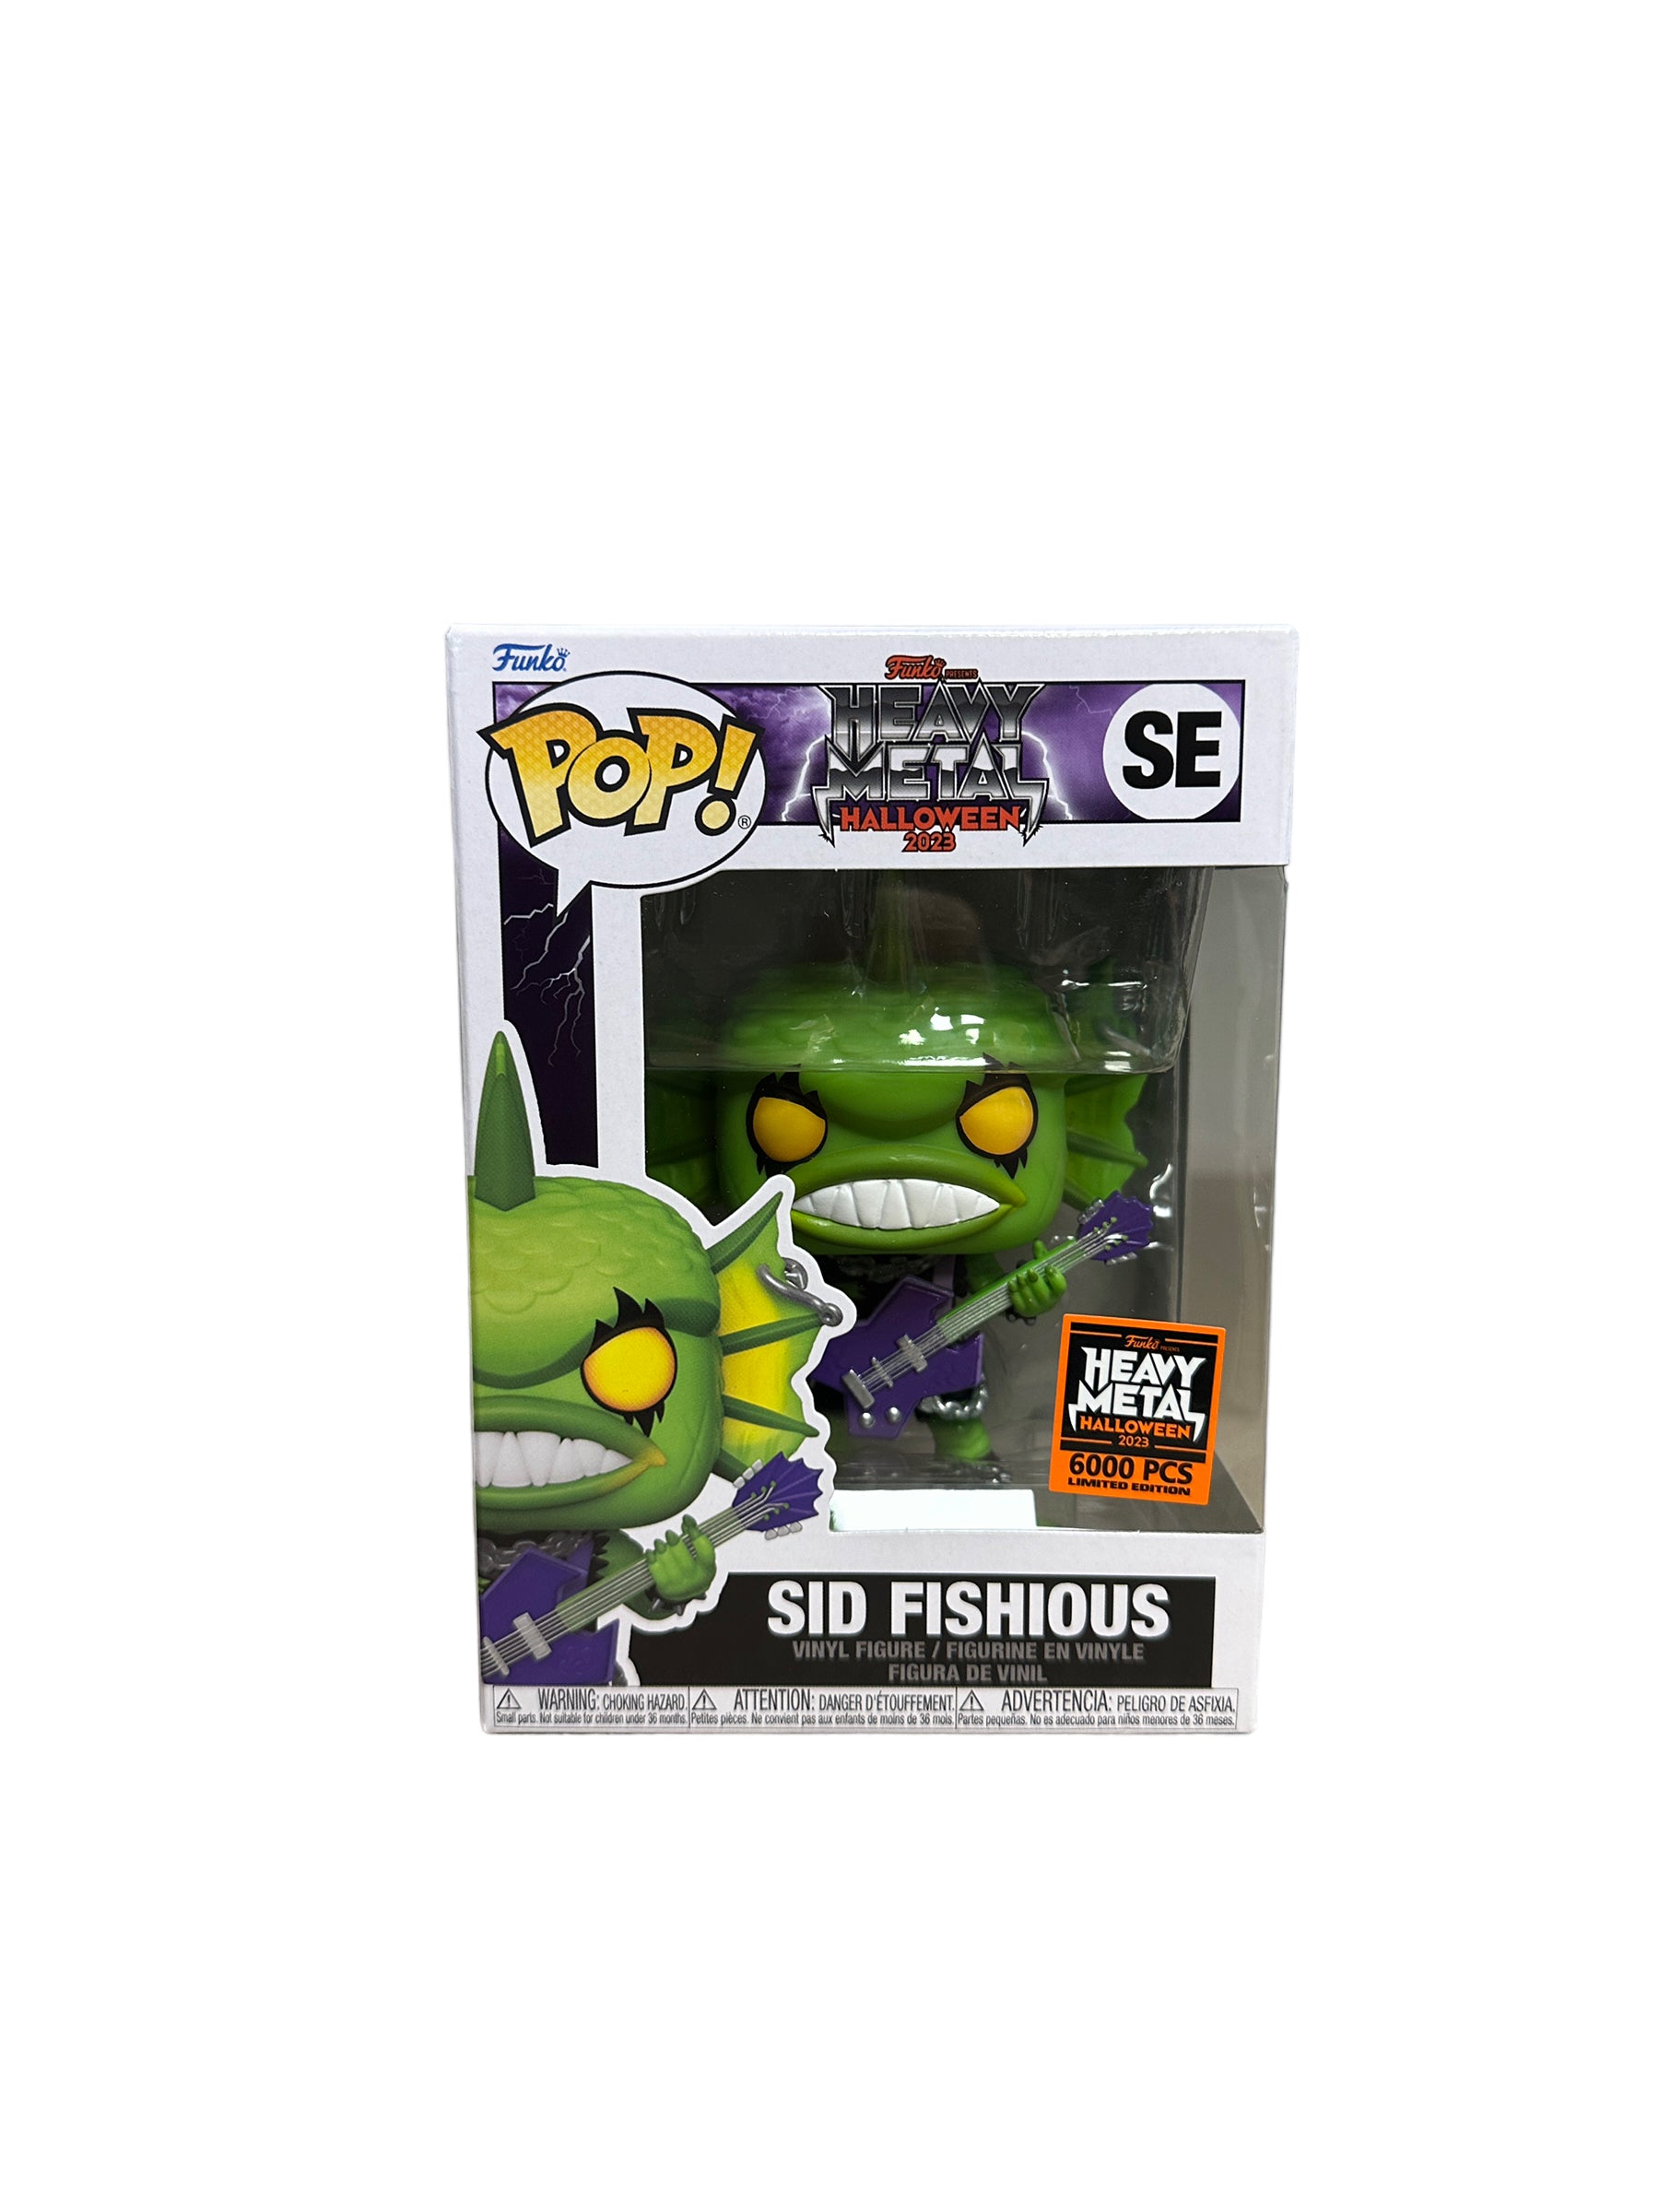 Sid Fishious Funko Pop! - Heavy Metal Halloween 2023 Exclusive LE6000 Pcs - Condition 8.5/10